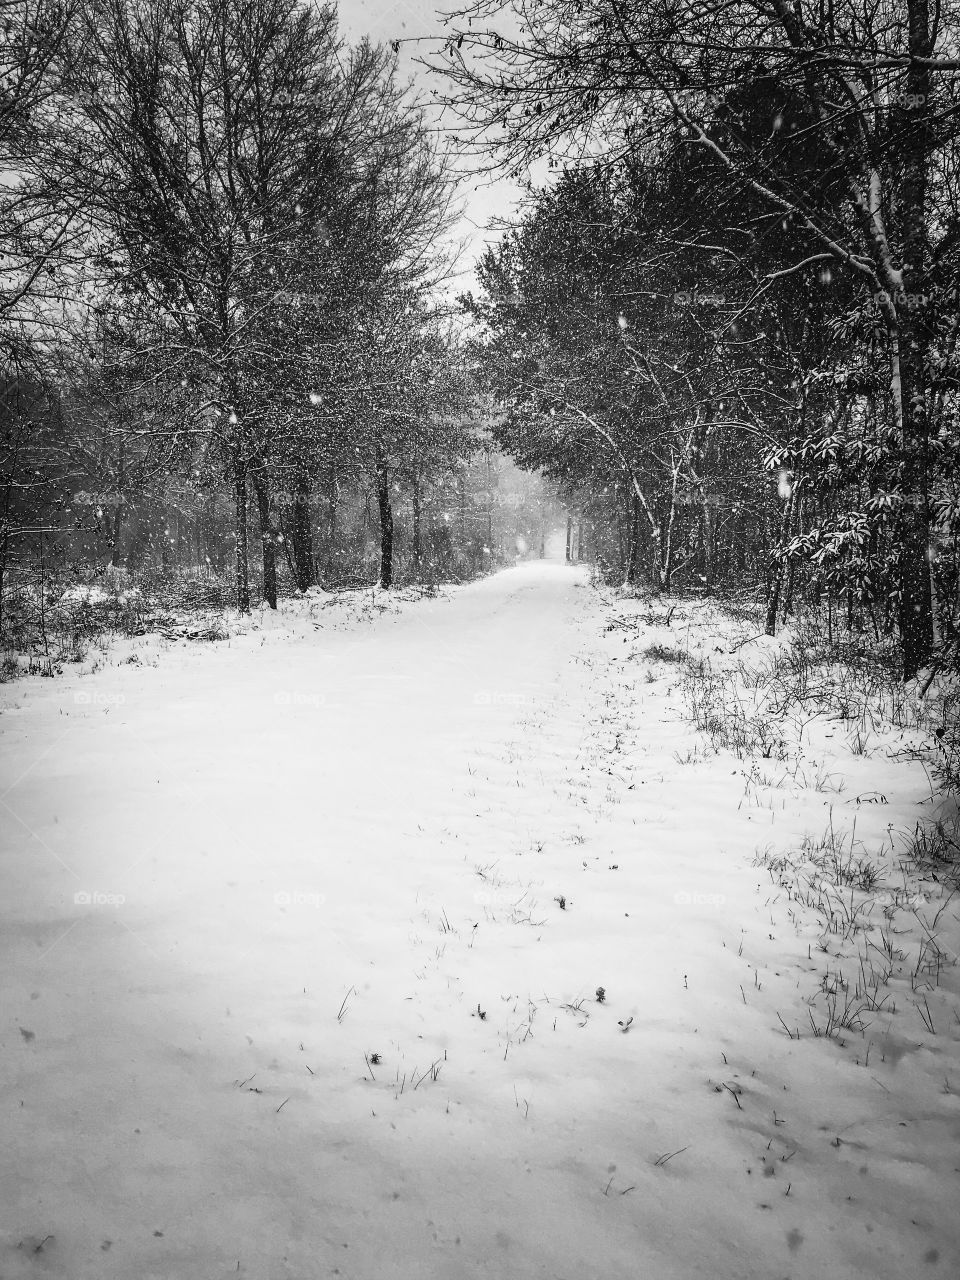 Walking in a winter wonderland 